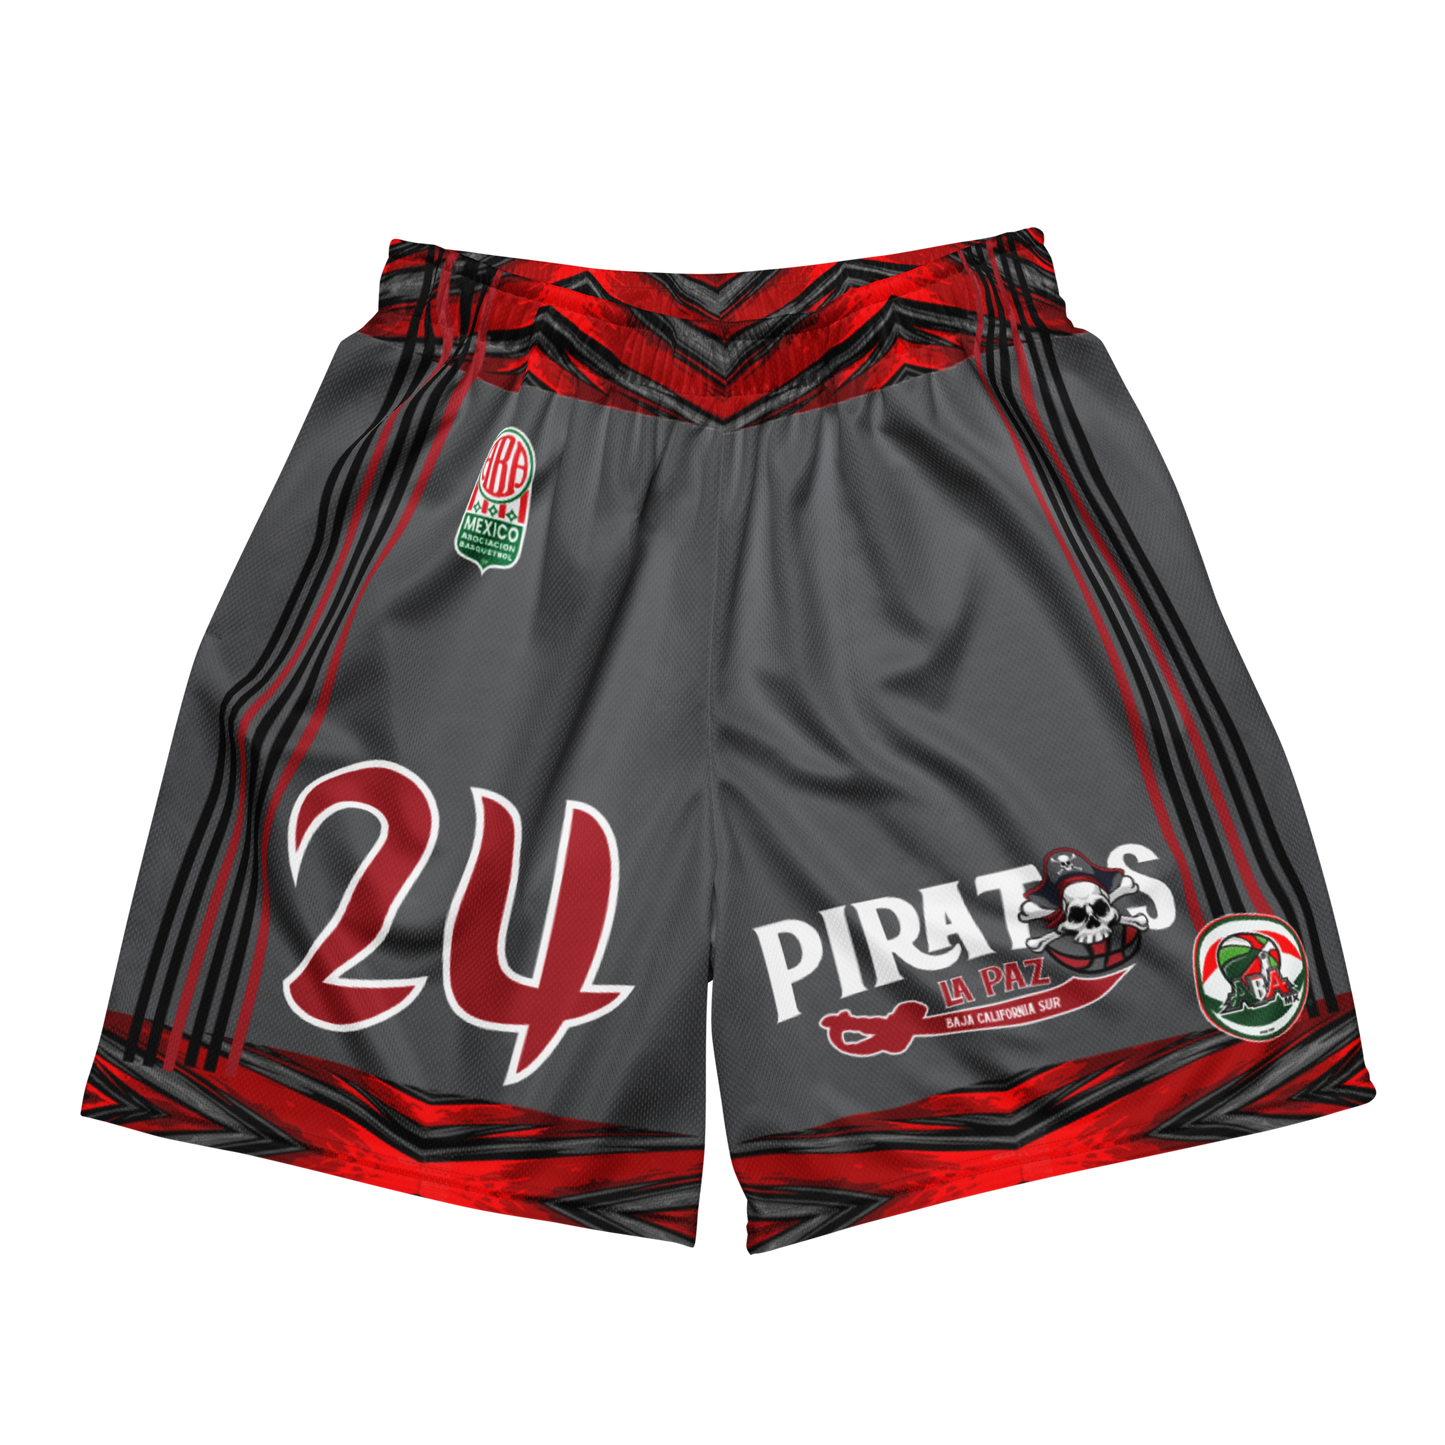 The Grey Piratas de La Paz Shorts